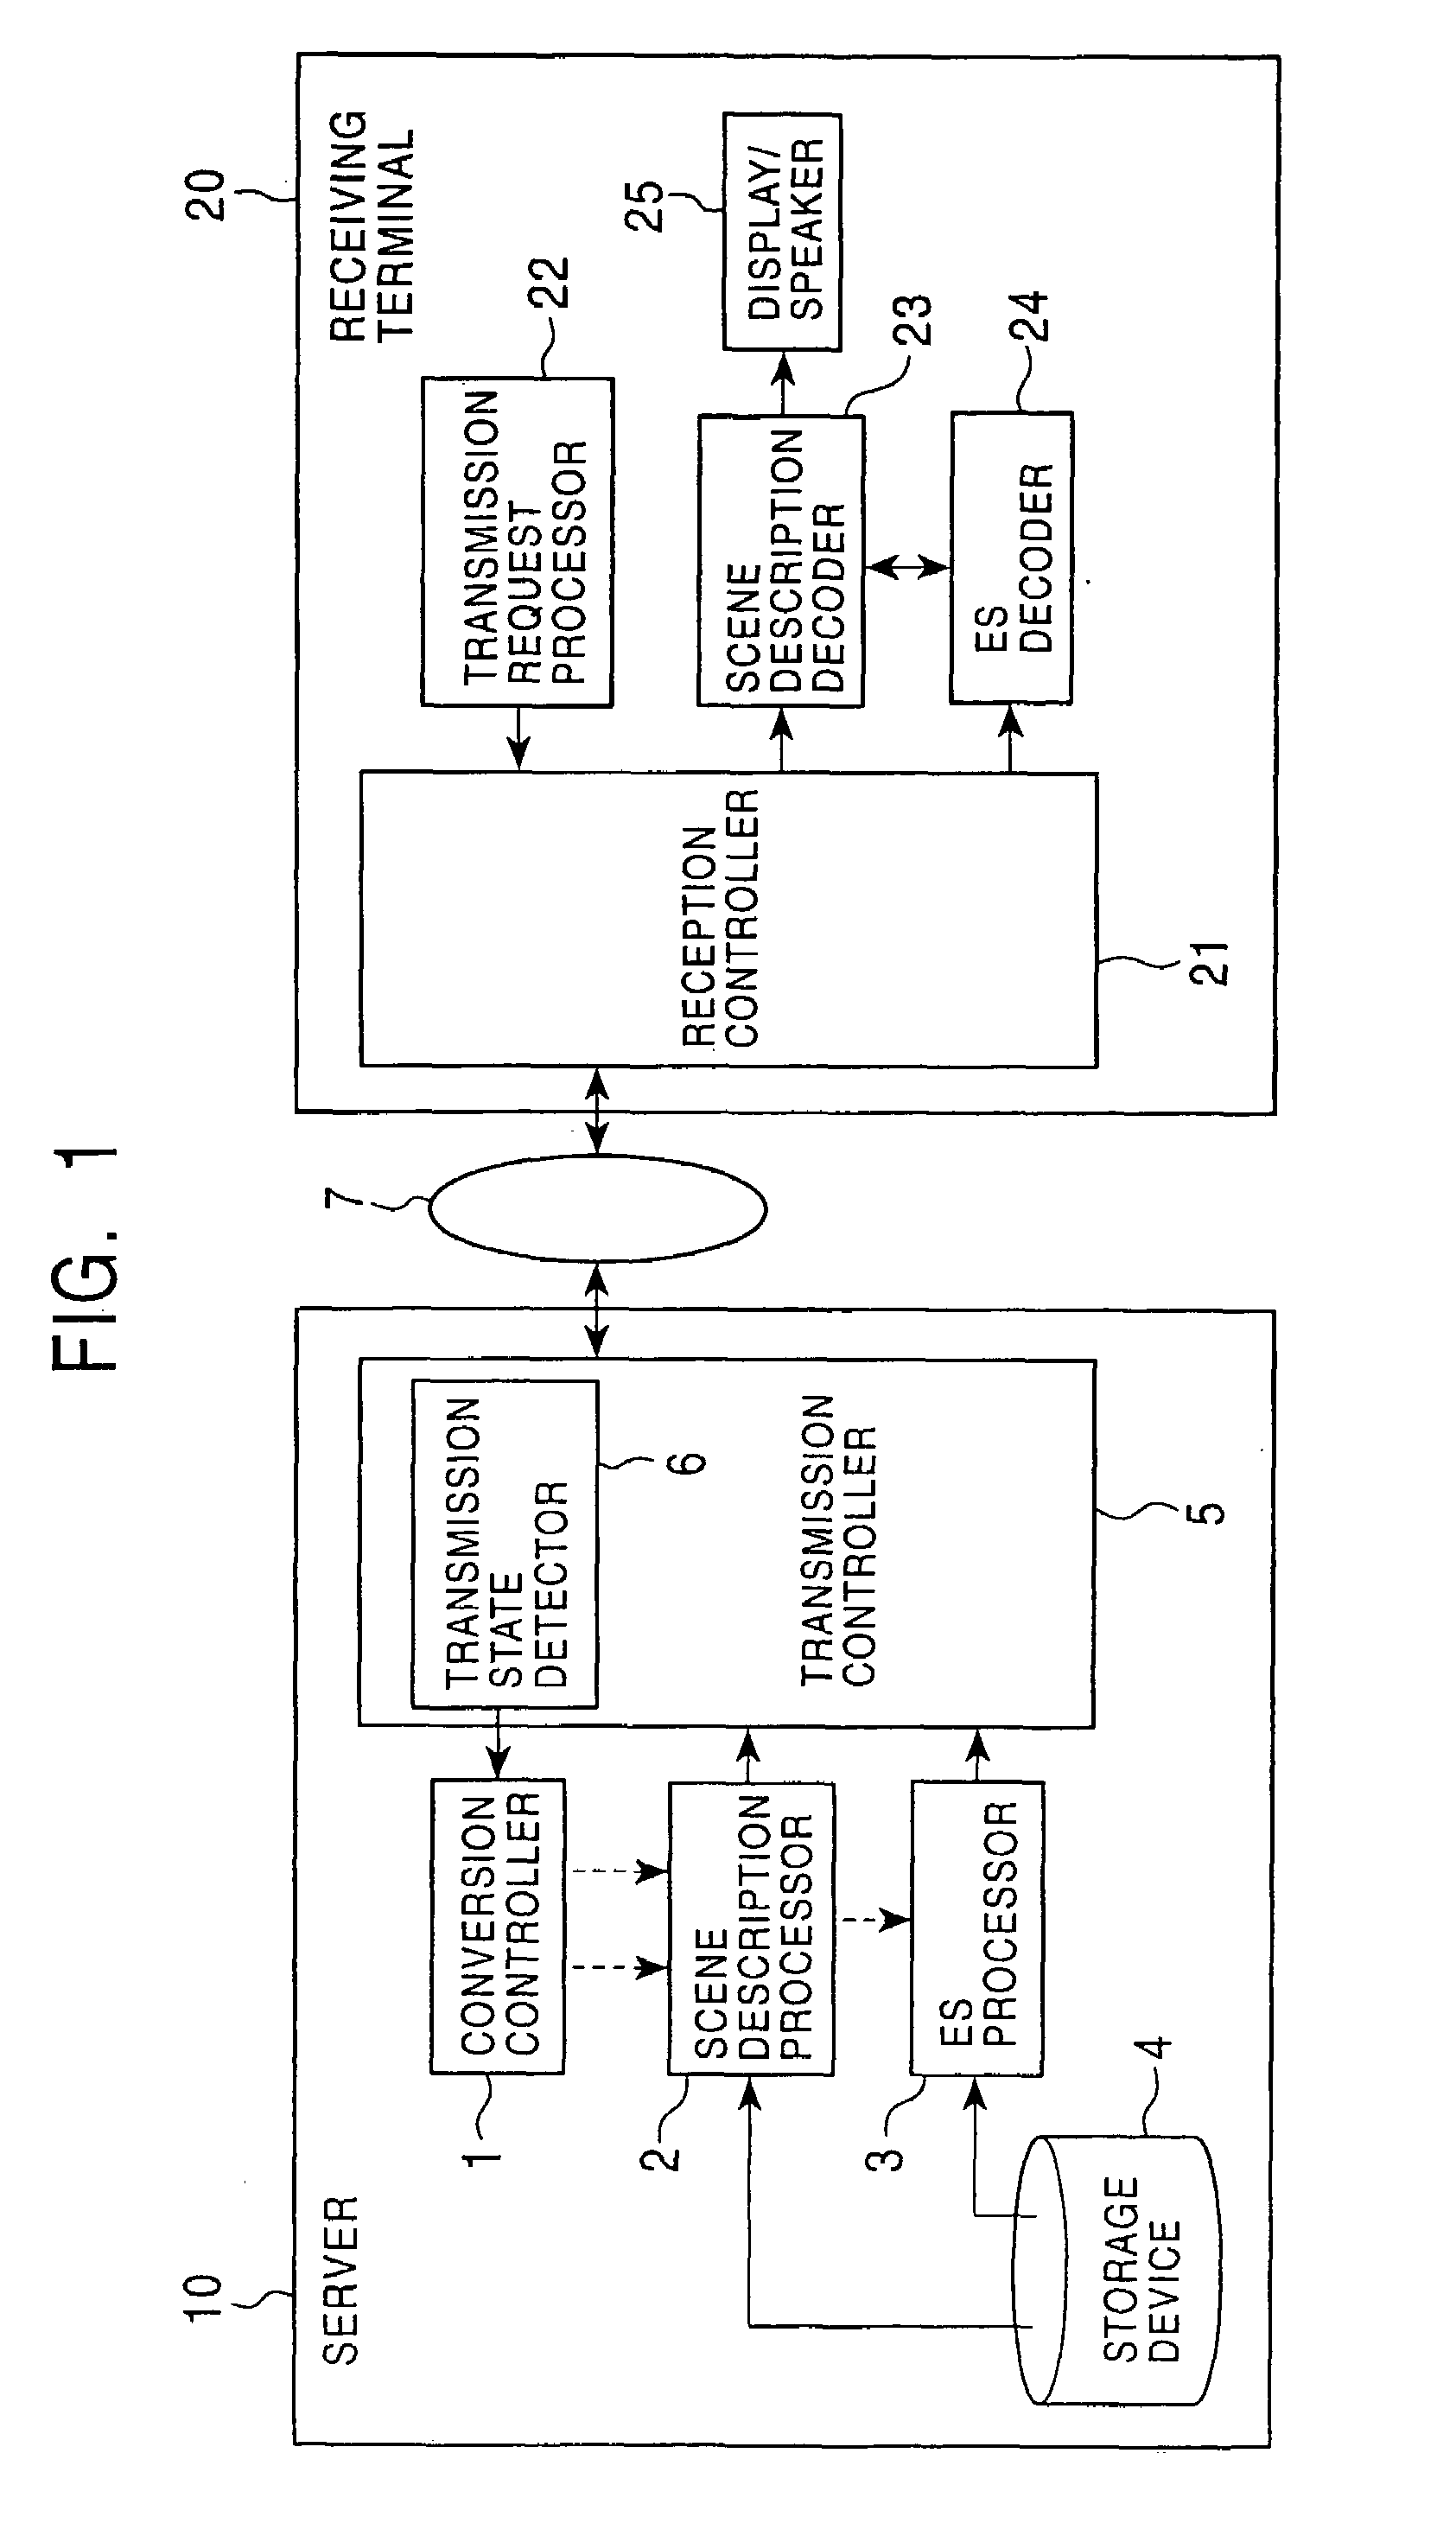 Transmission apparatus and transmission method